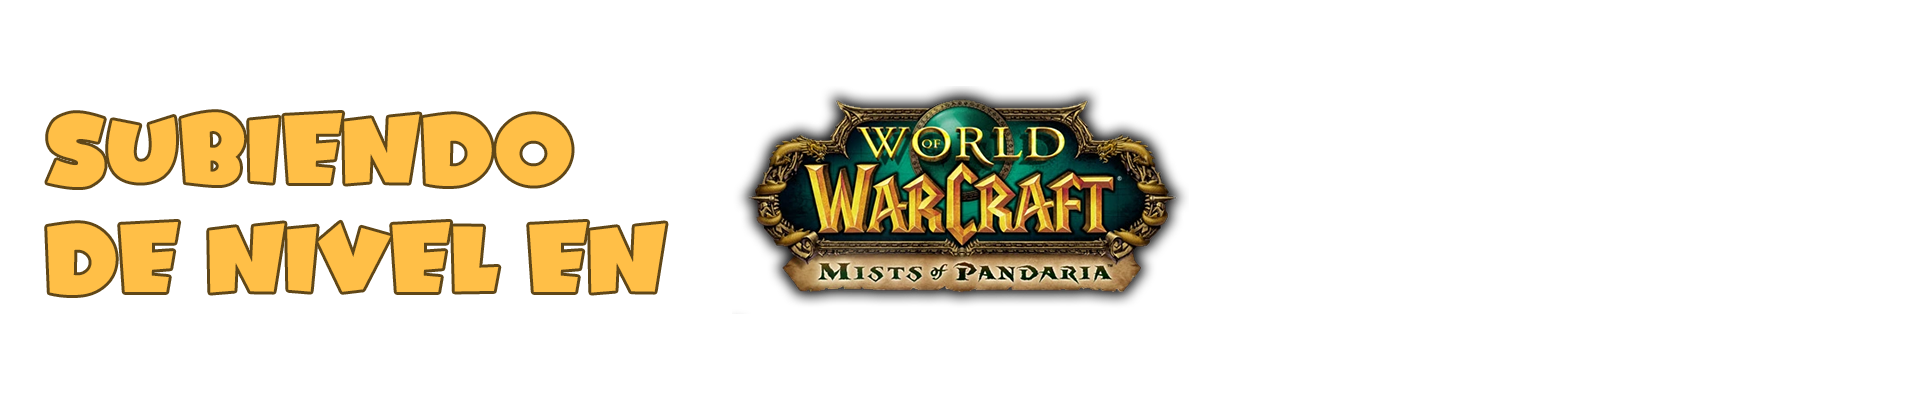 Subiendo de Nivel en World of Warcraft Mist of Pandaria